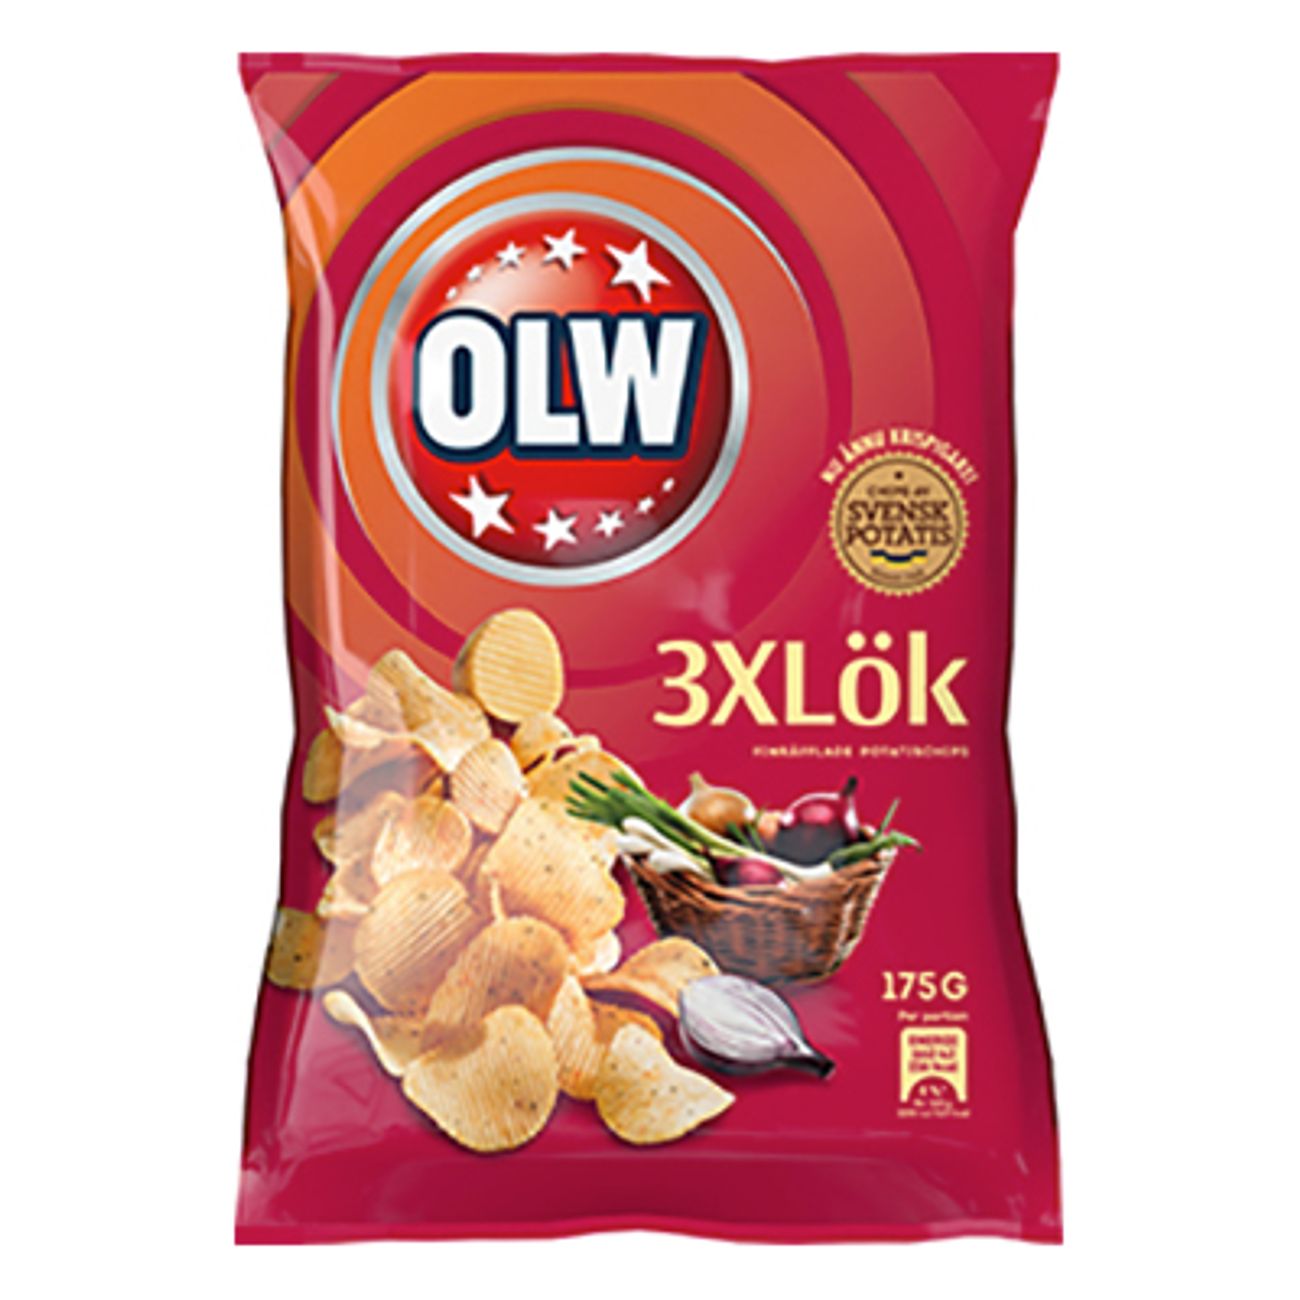 olw-3xlok-chips-1